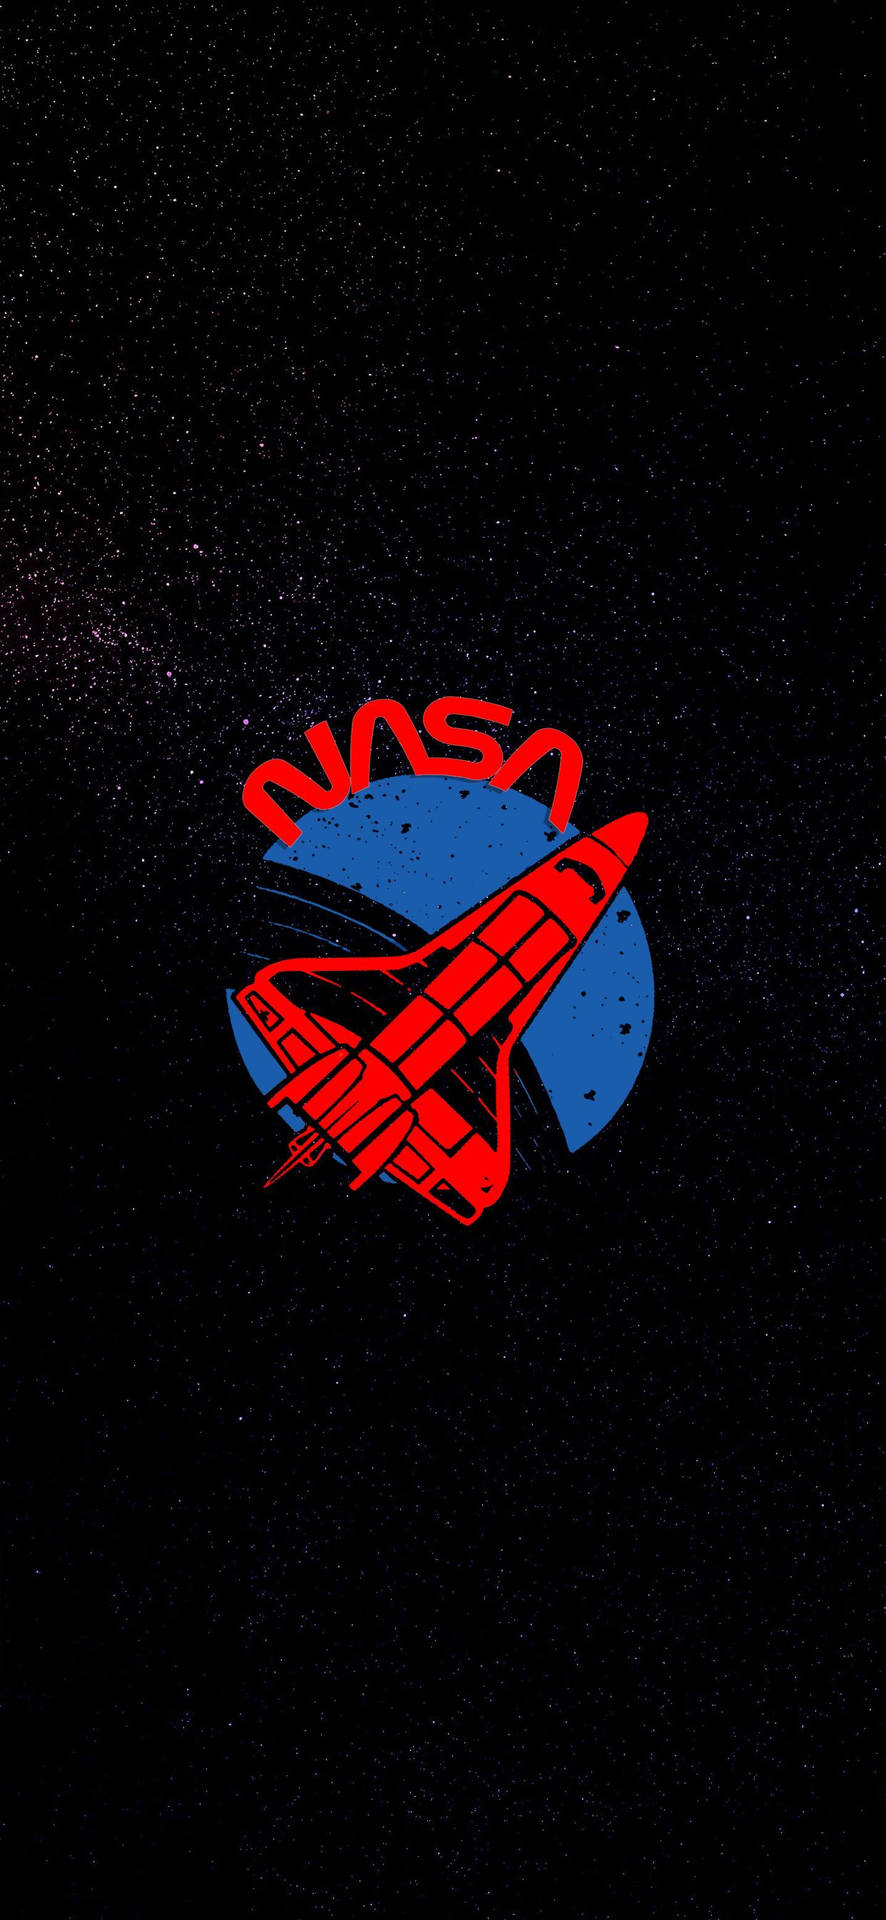 Nasaiphone Wurm Space Shuttle Wallpaper